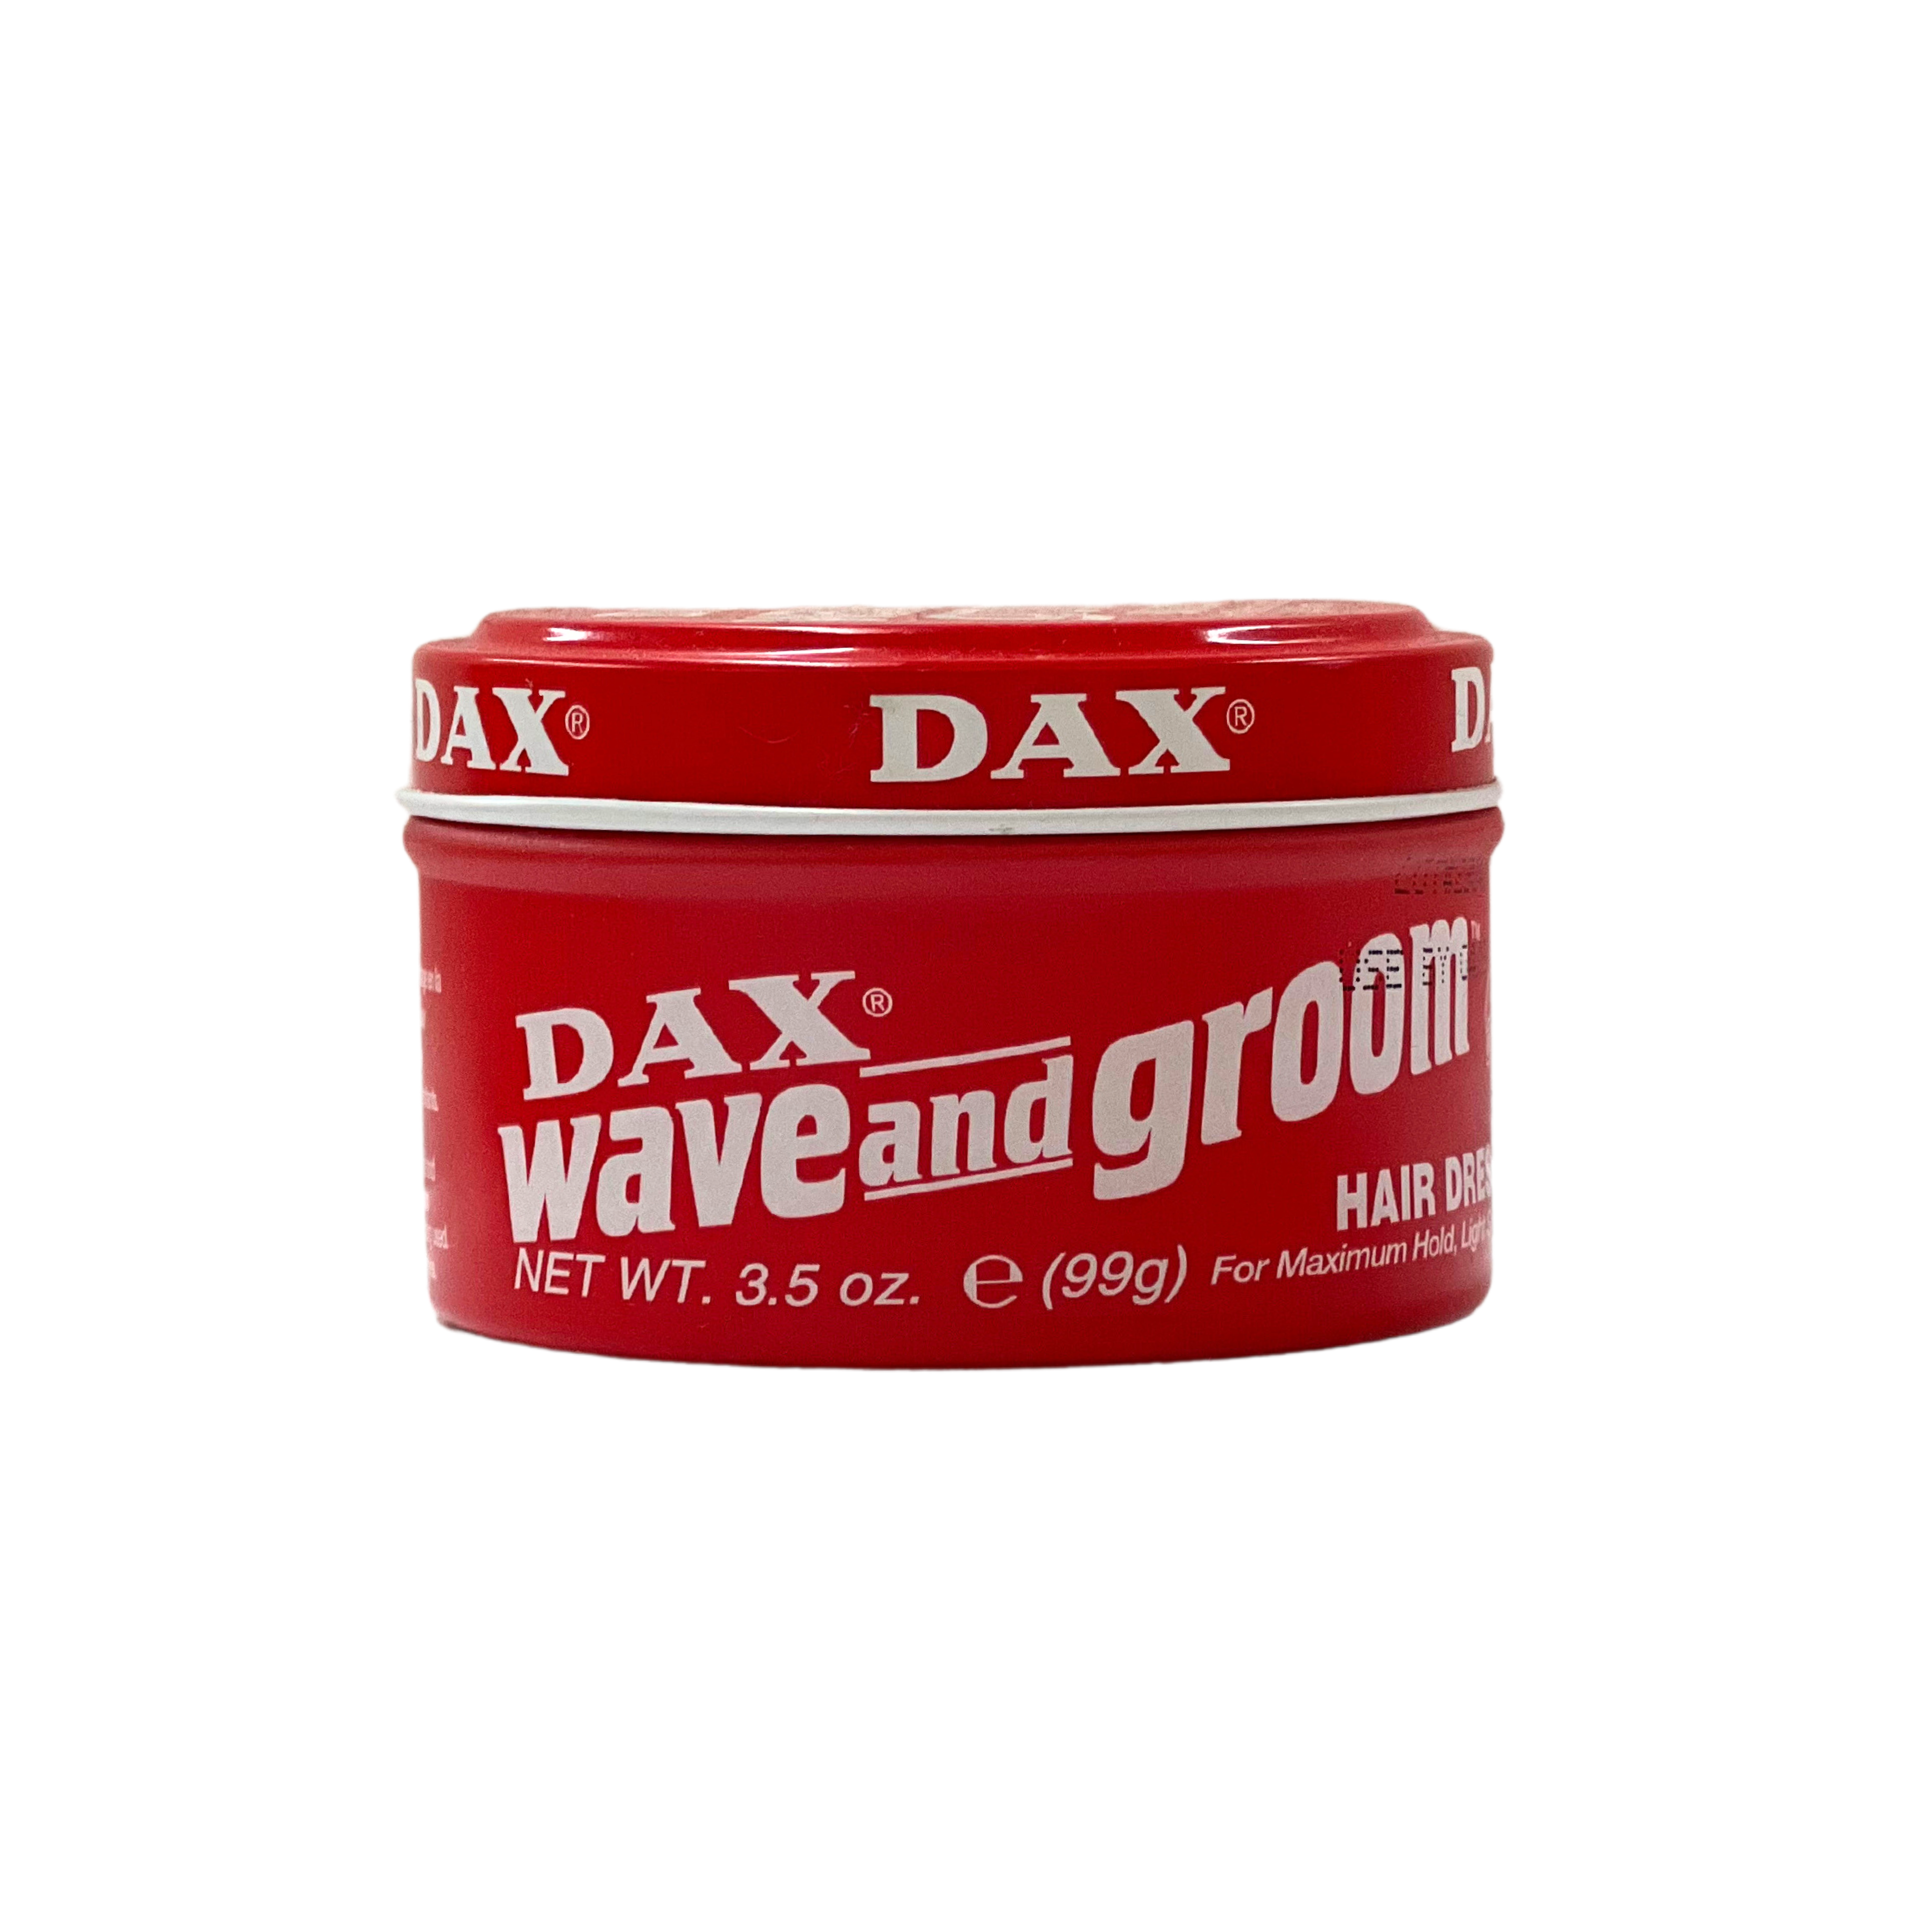 Dax Wave and Groom hair Dress 3.5oz